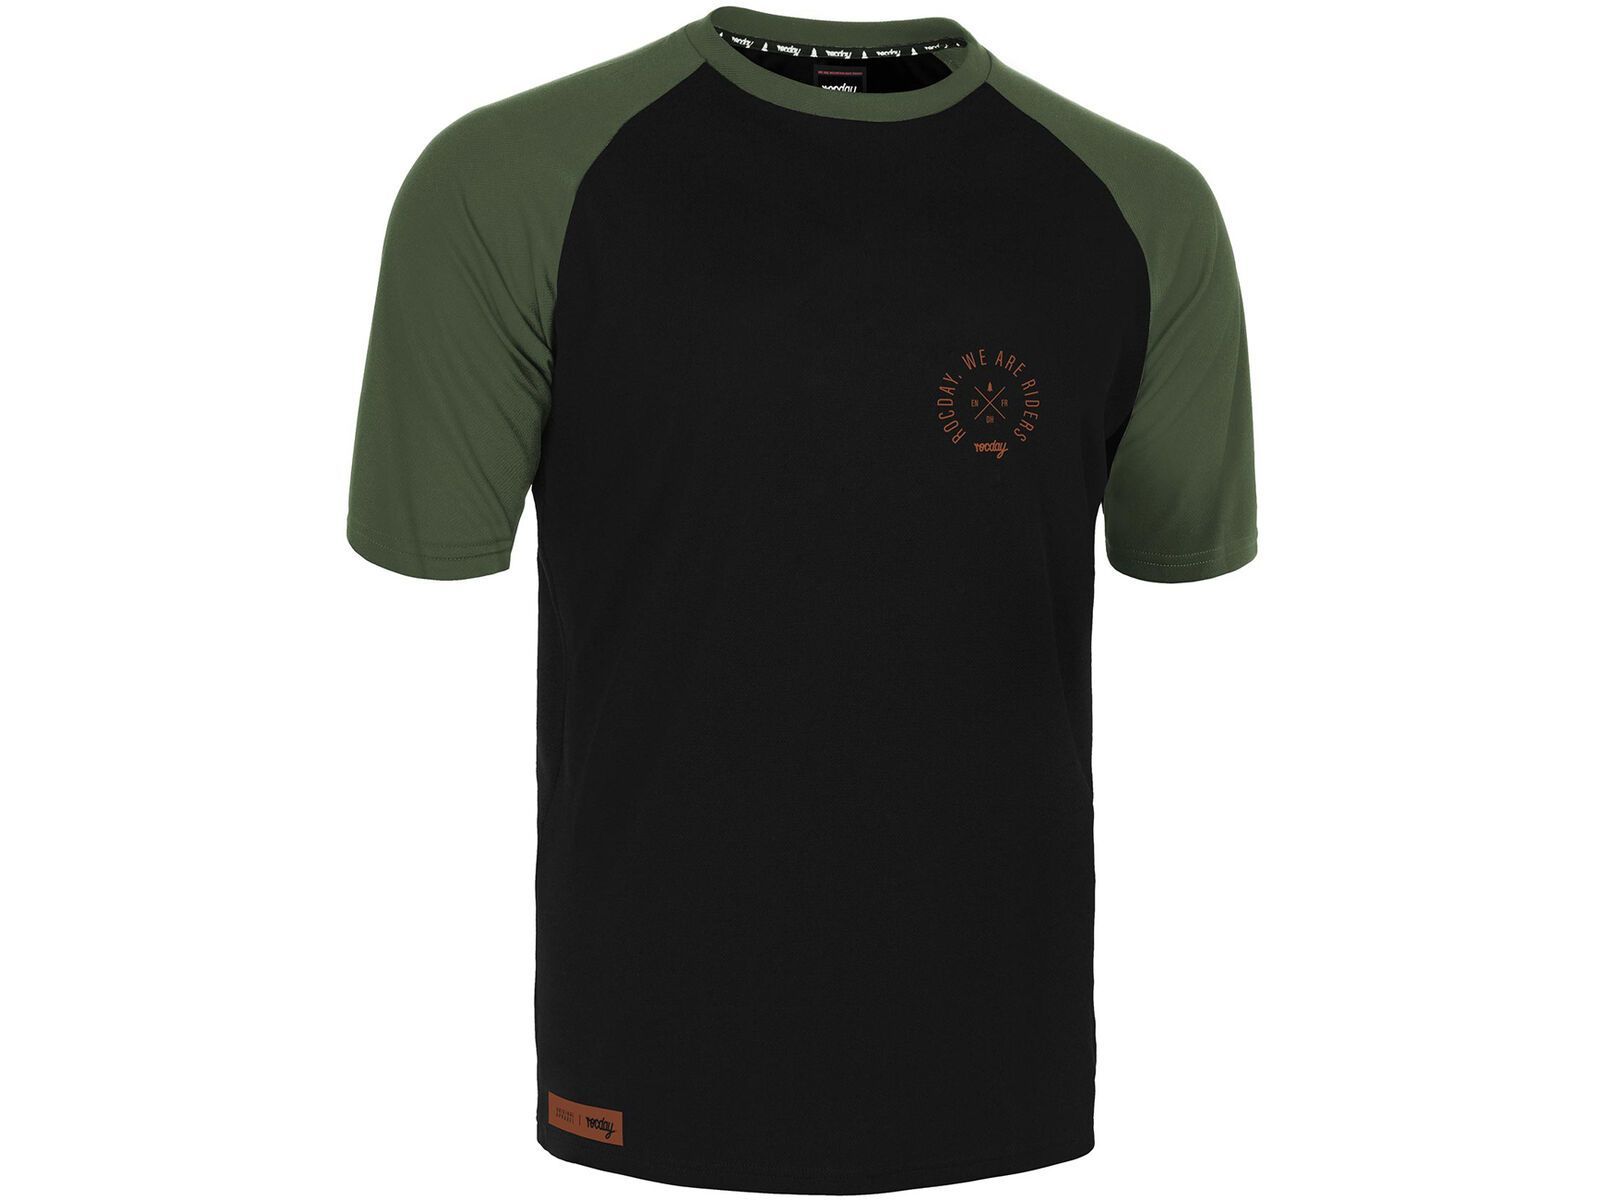 Rocday Roost Short Sleeve Jersey, black/green | Bild 1